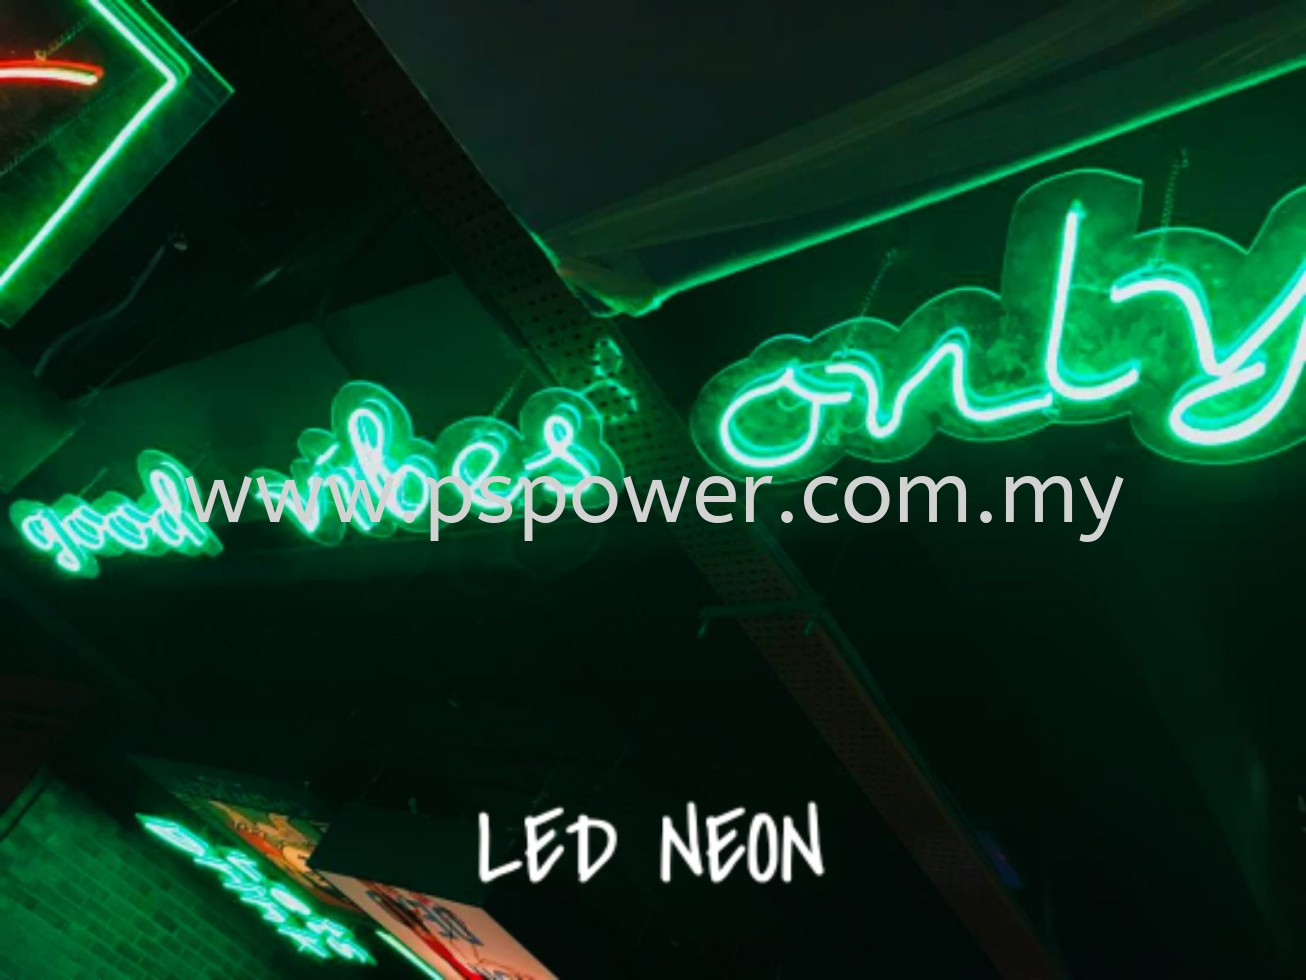 LED NEON